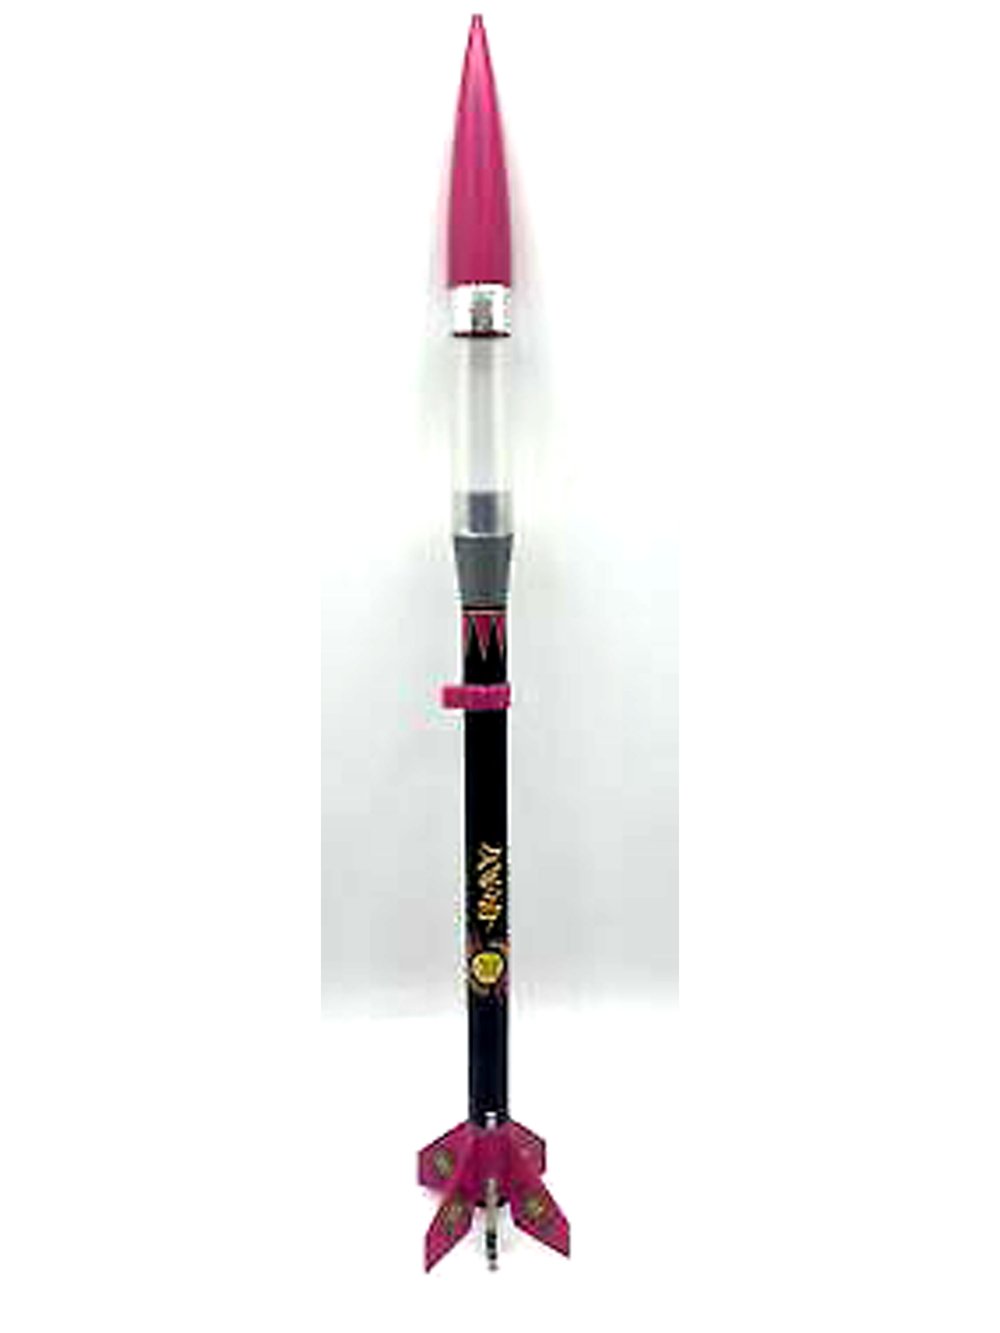 Buy Estes Scorpius Flying Model Rocket Kit - #1375 — Launch Lab Rocketry